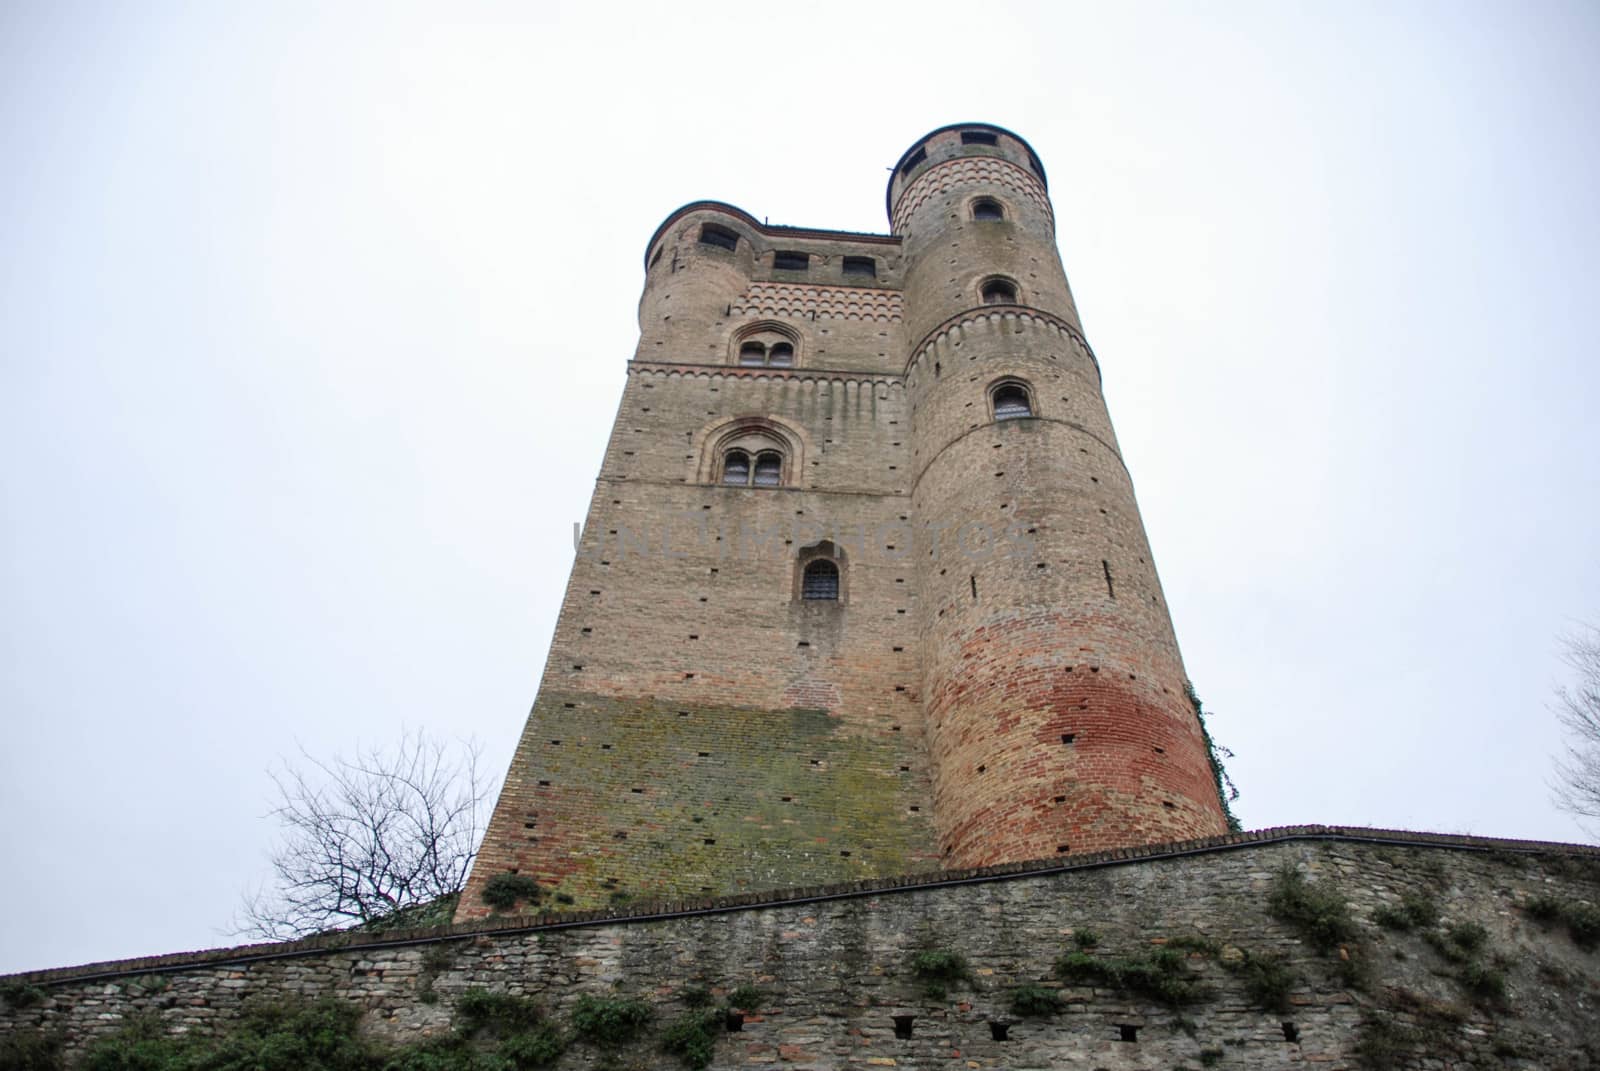 Castle of Serralunga d'Alba, Piedmont - Italy by cosca